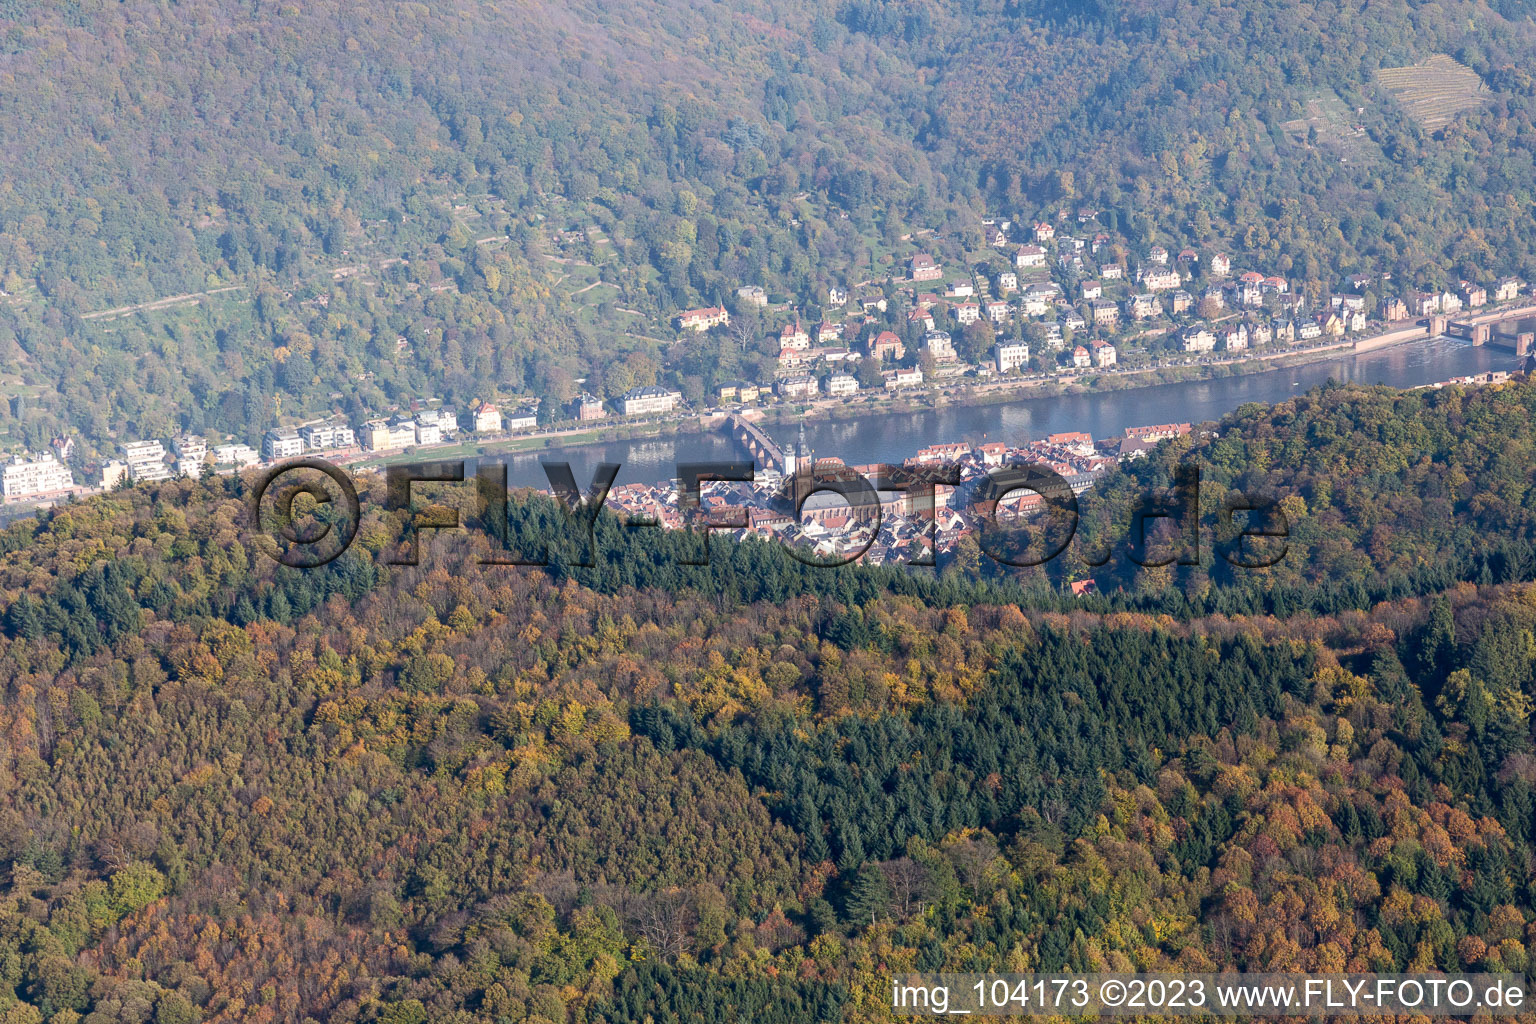 Aerial view of Neckar Valley in the district Kernaltstadt in Heidelberg in the state Baden-Wuerttemberg, Germany